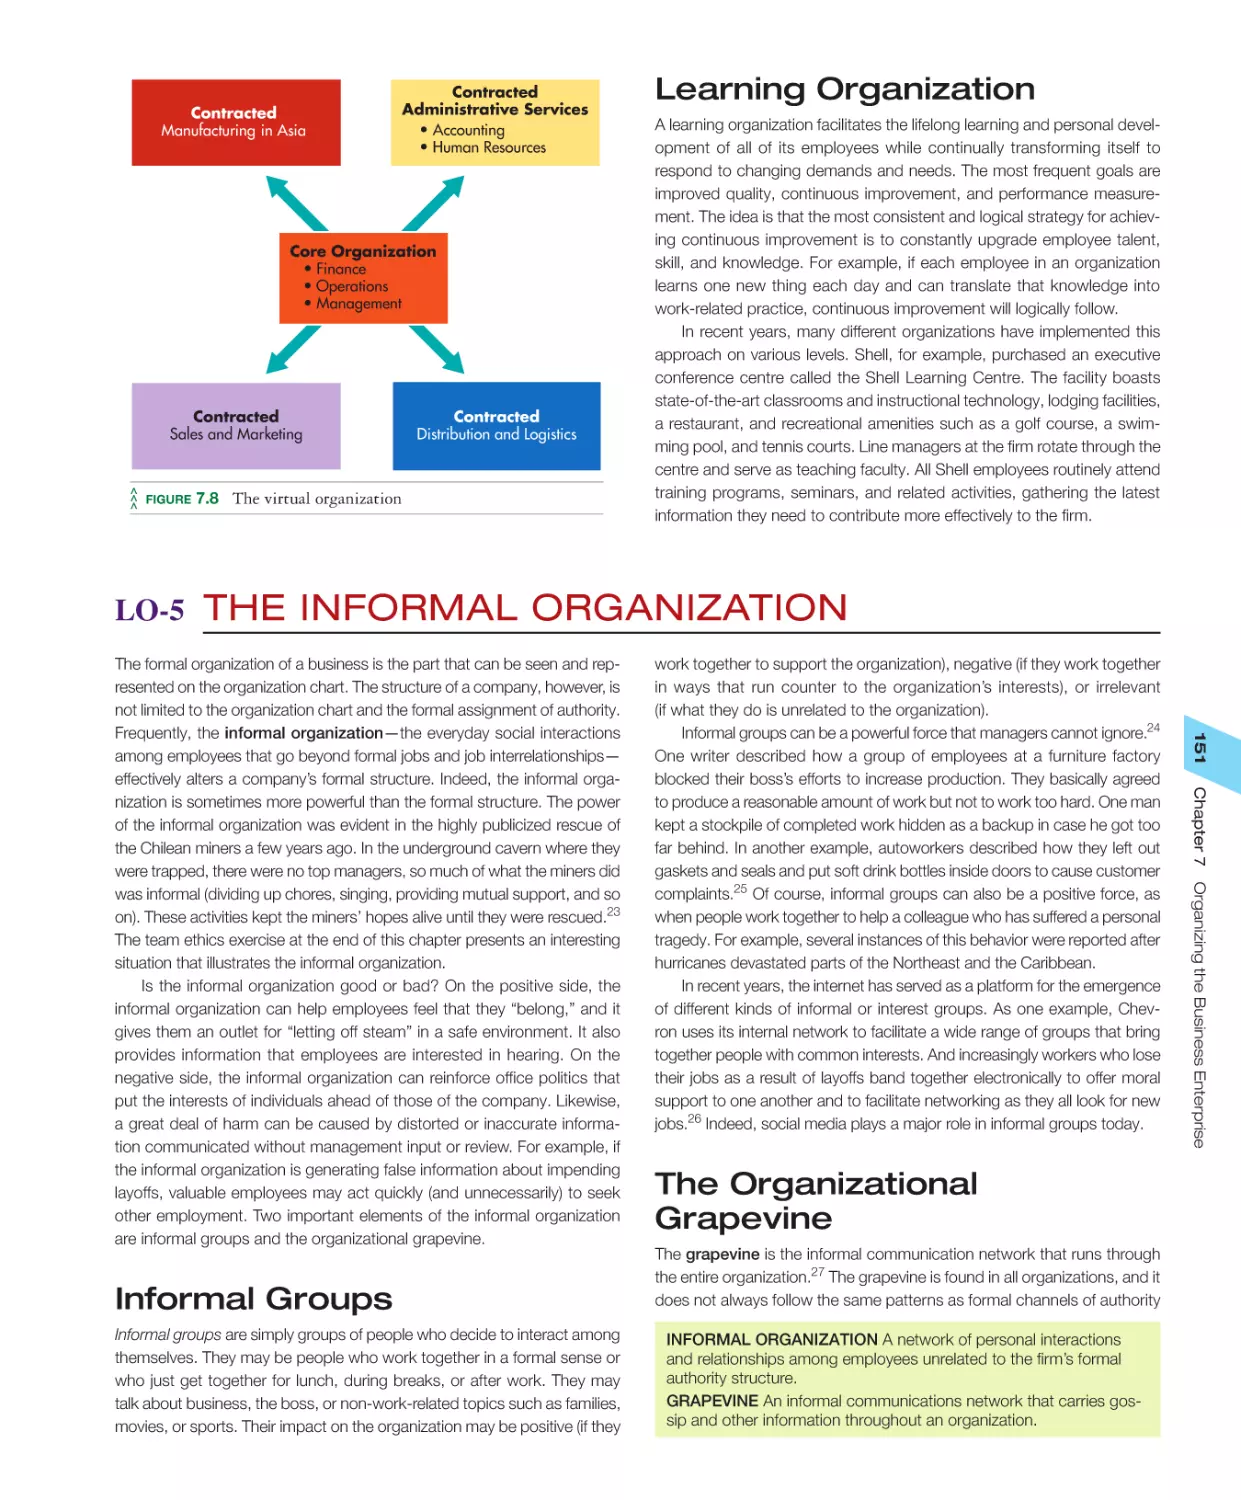 Learning Organization
LO‐5 The Informal Organization
The Organizational Grapevine